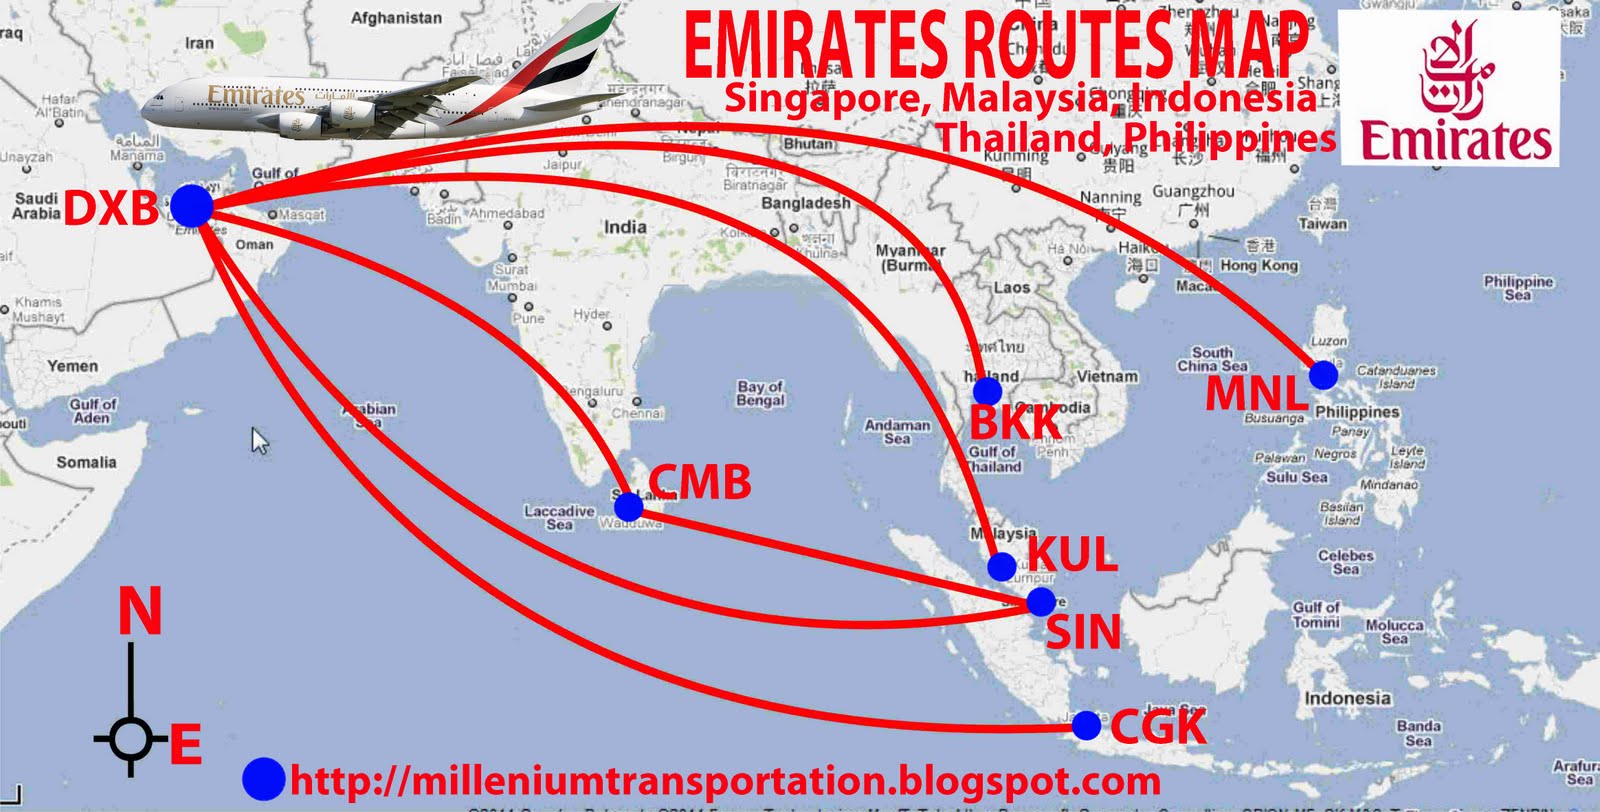 civil aviation: Emirates flight routes to southeast asia